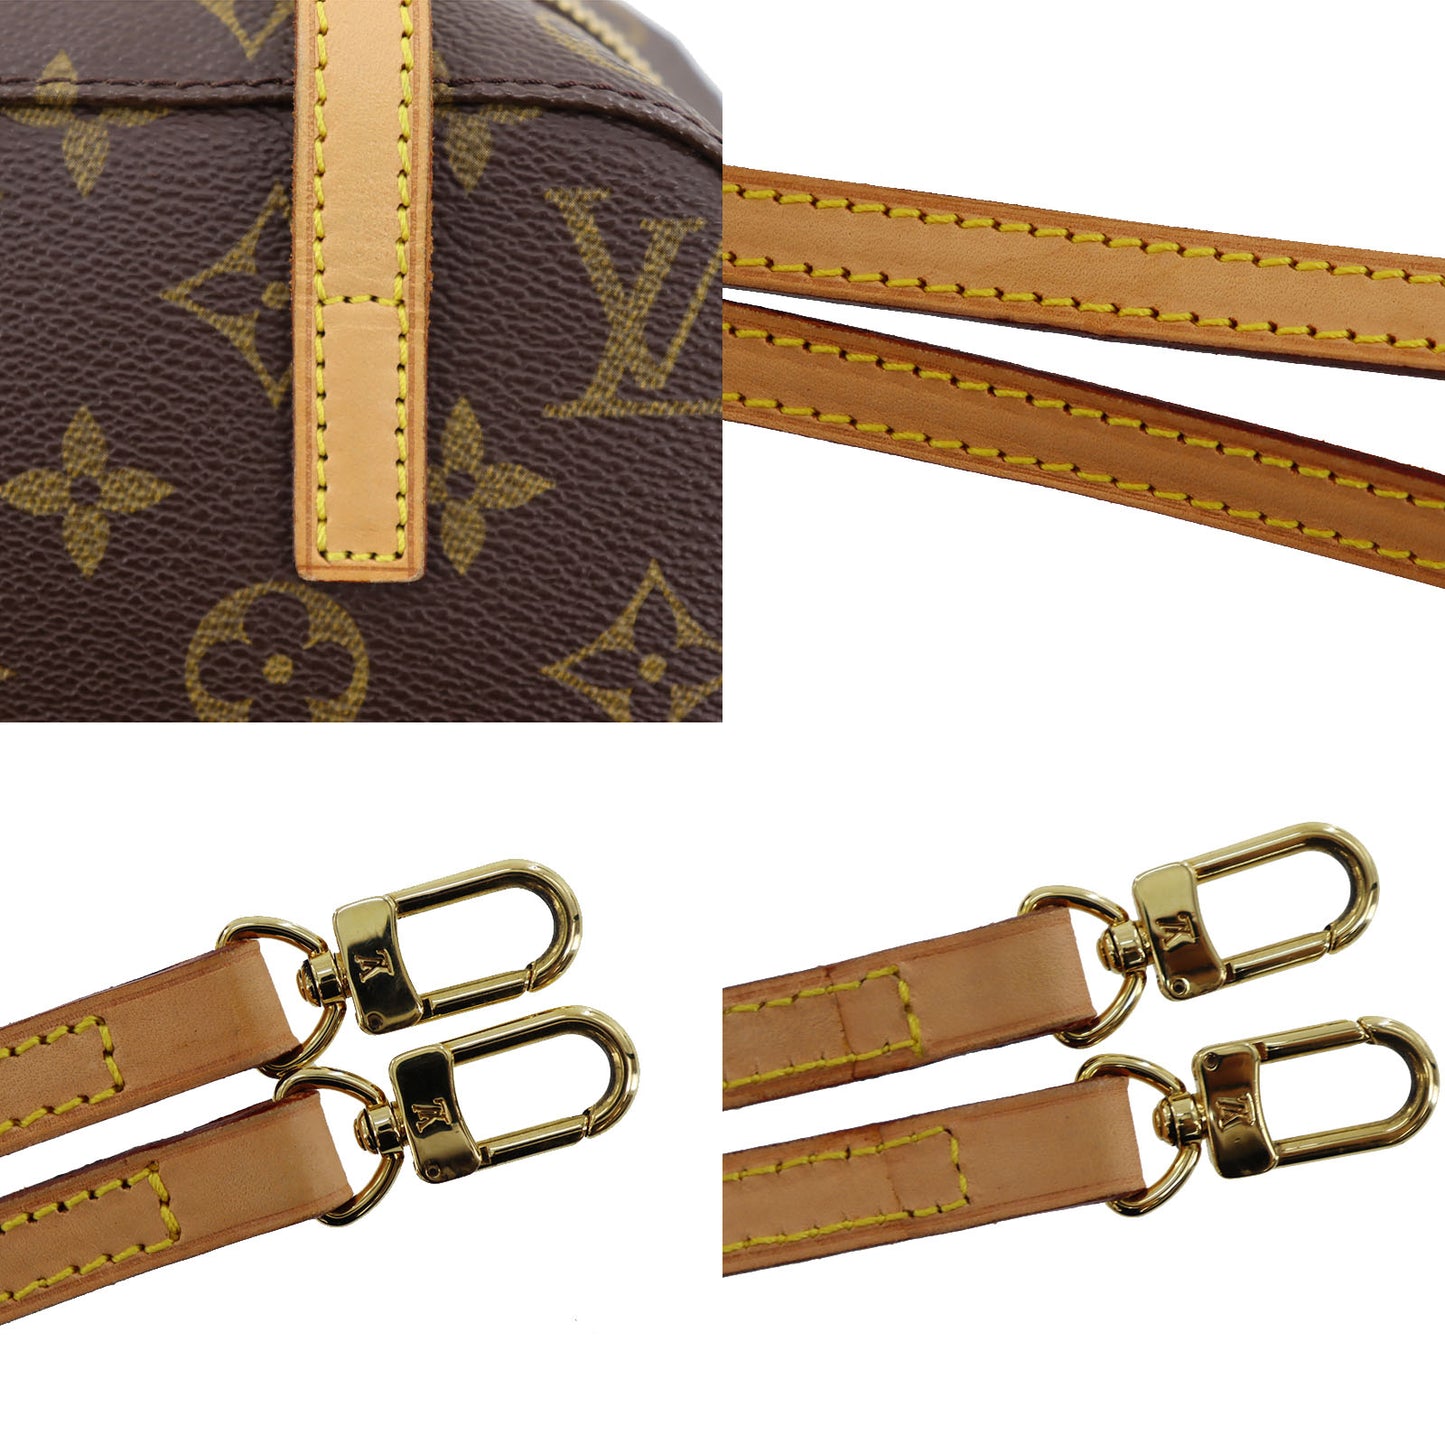 Louis Vuitton pre-owned Spontini 2way bag